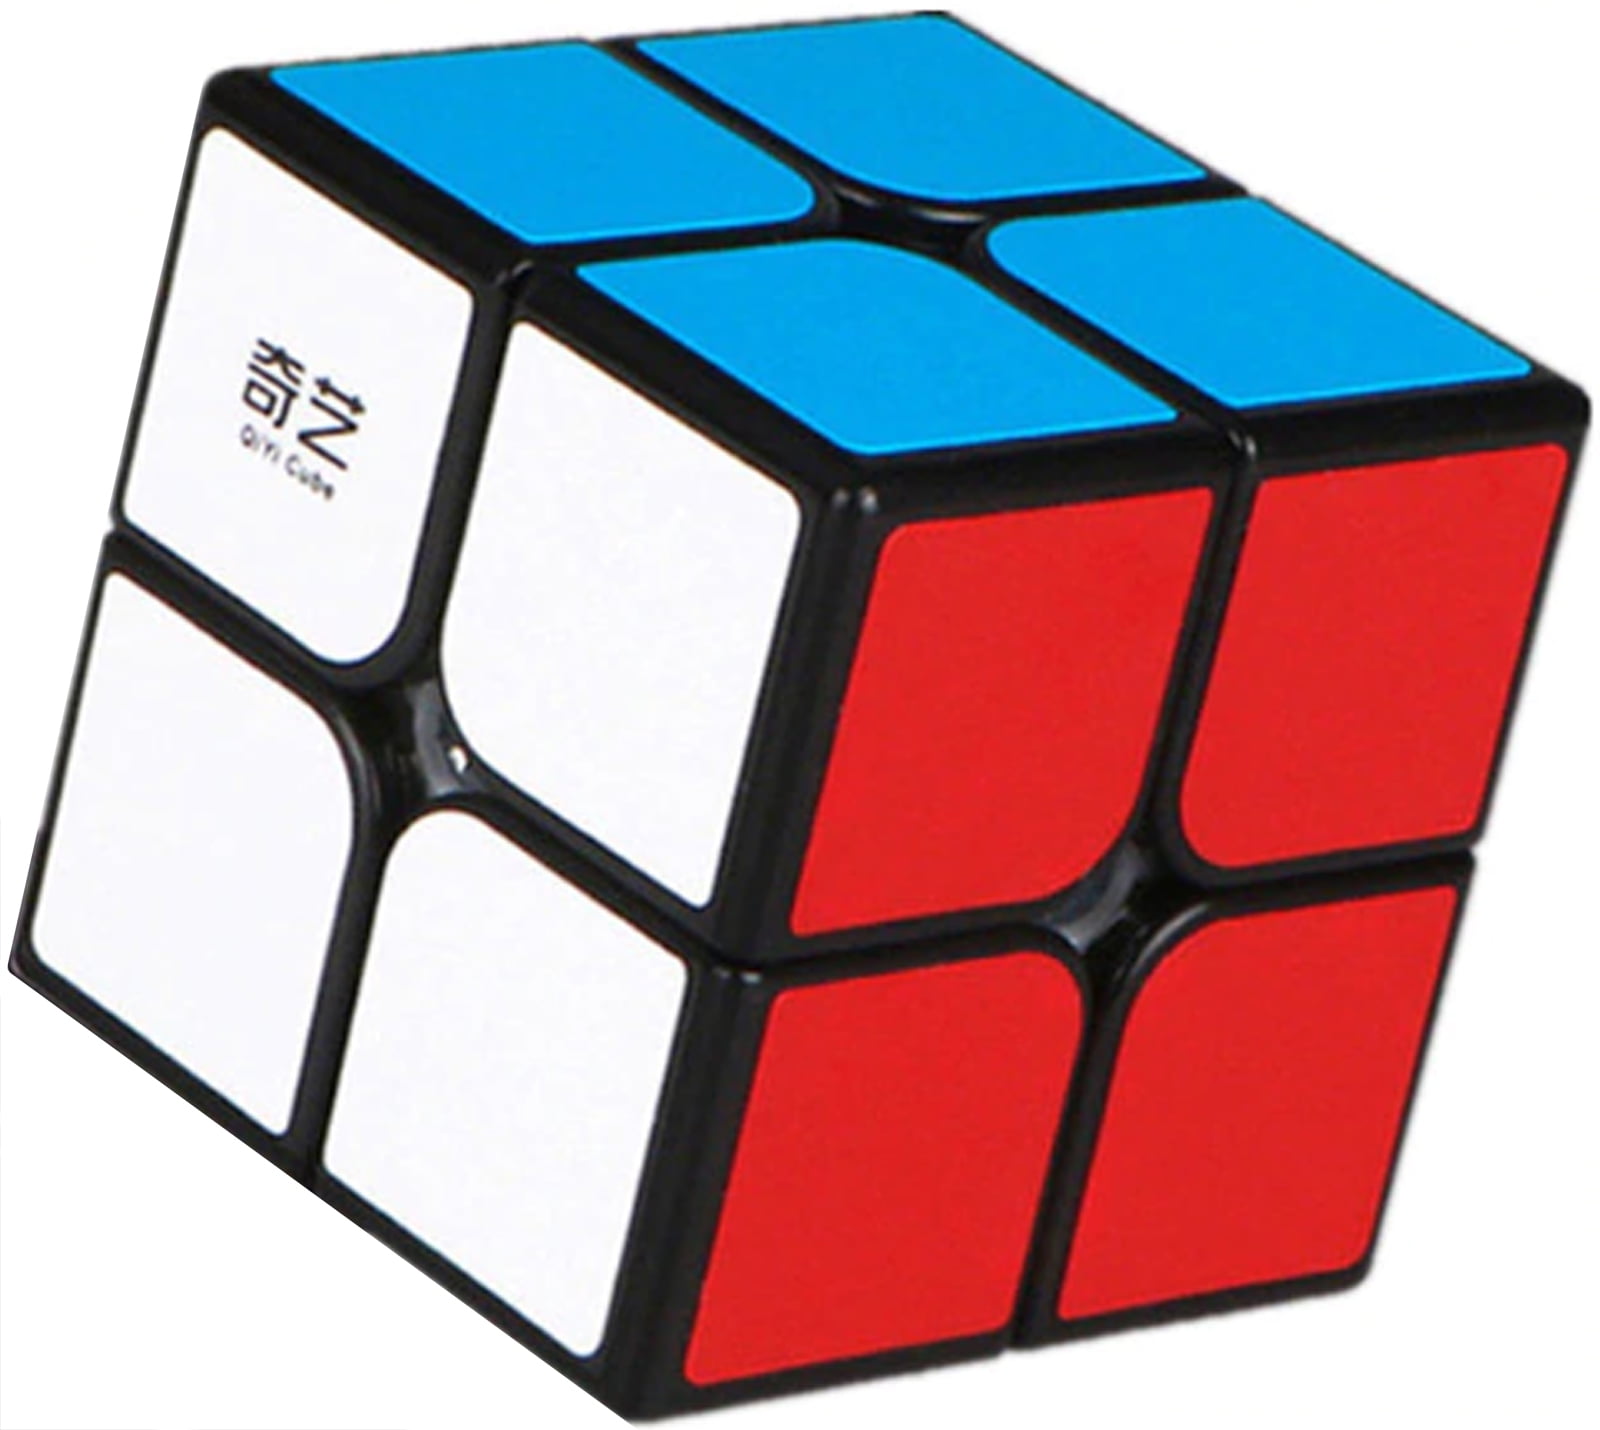 QiYi Qiyuan S 4x4 Magic Speed Cube Puzzle Intelligence Brain Teasers Toys Gift 